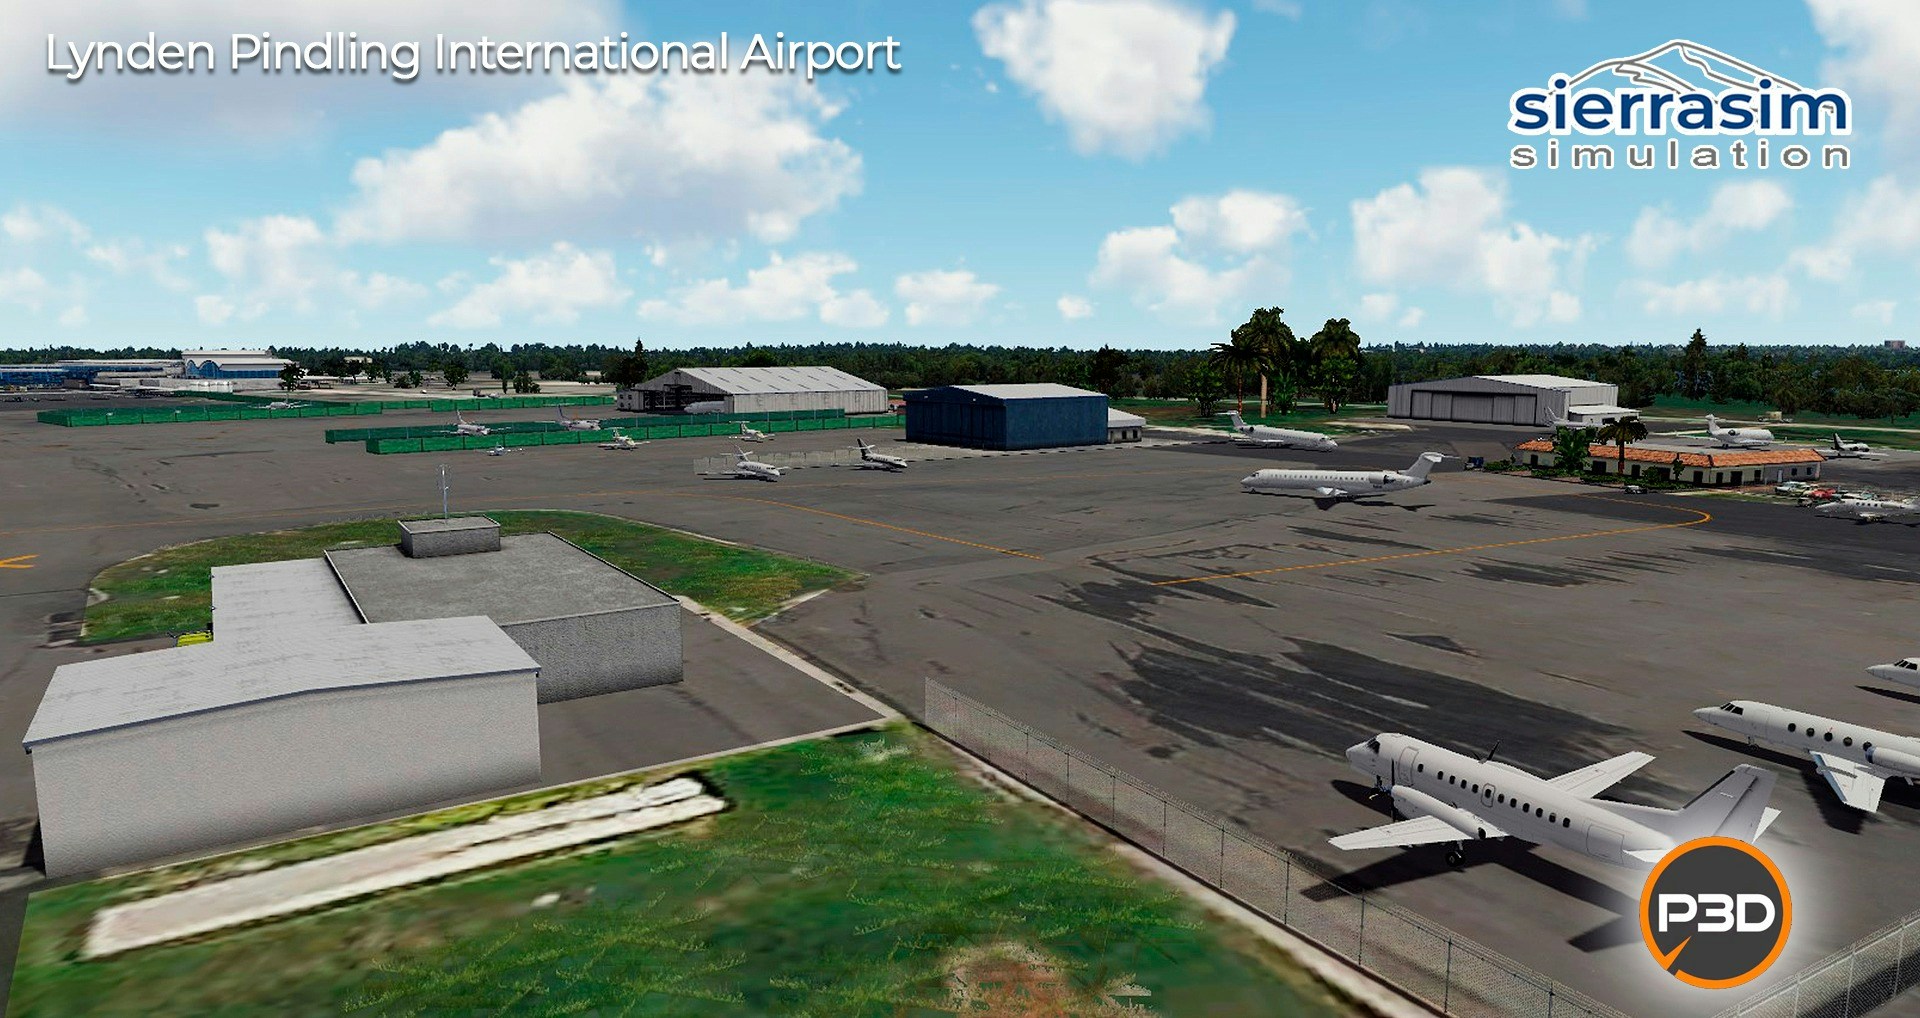 Sierrasim Simulation Releases Lynden Pindling International Airport for P3D